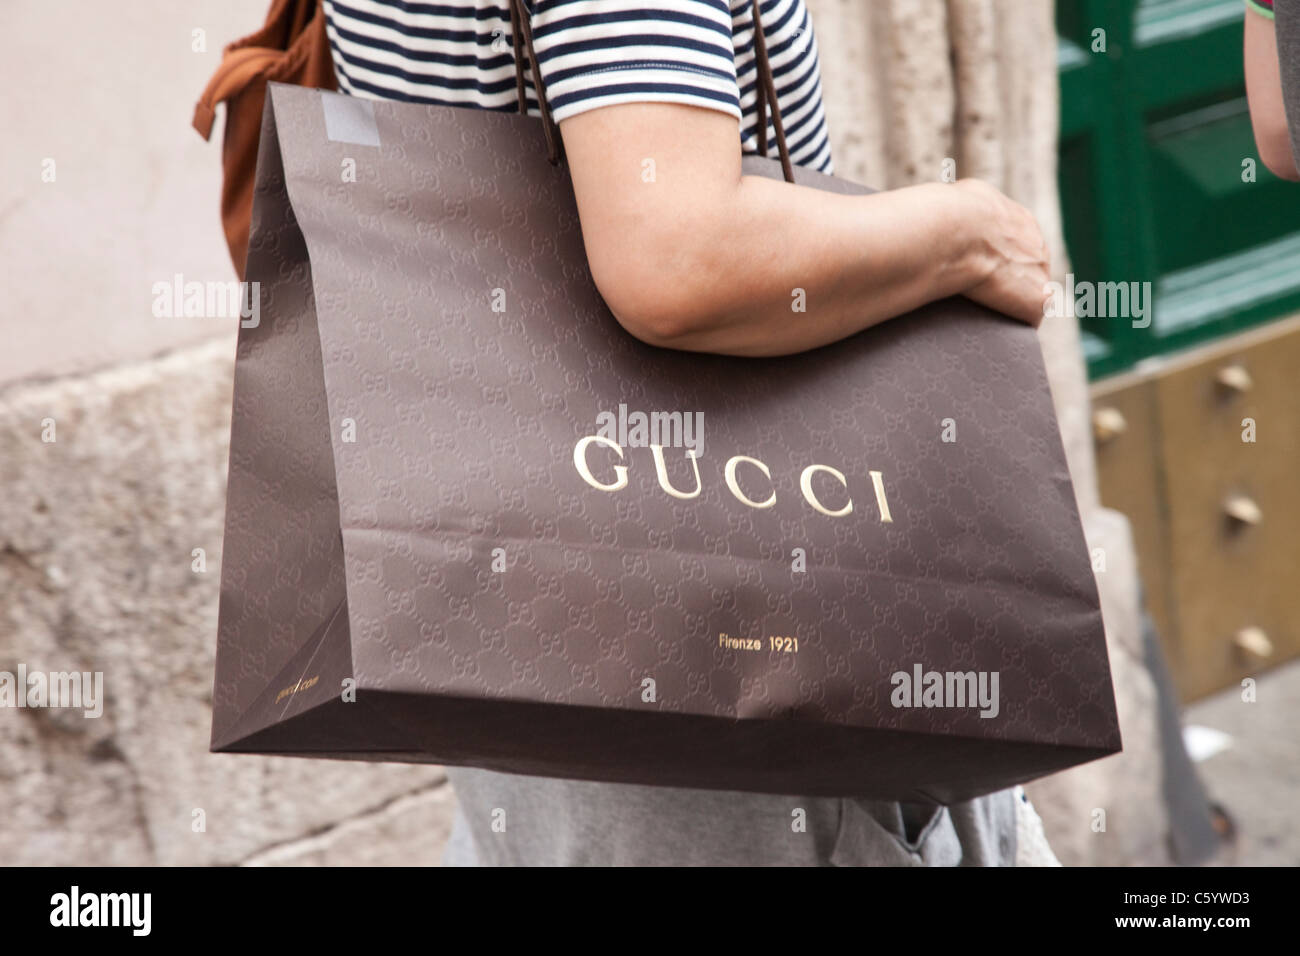 Italy, Rome, Via Dei Condotti, Street Scene, Woman Holding Gucci Shopping  Bag Stock Photo - Alamy